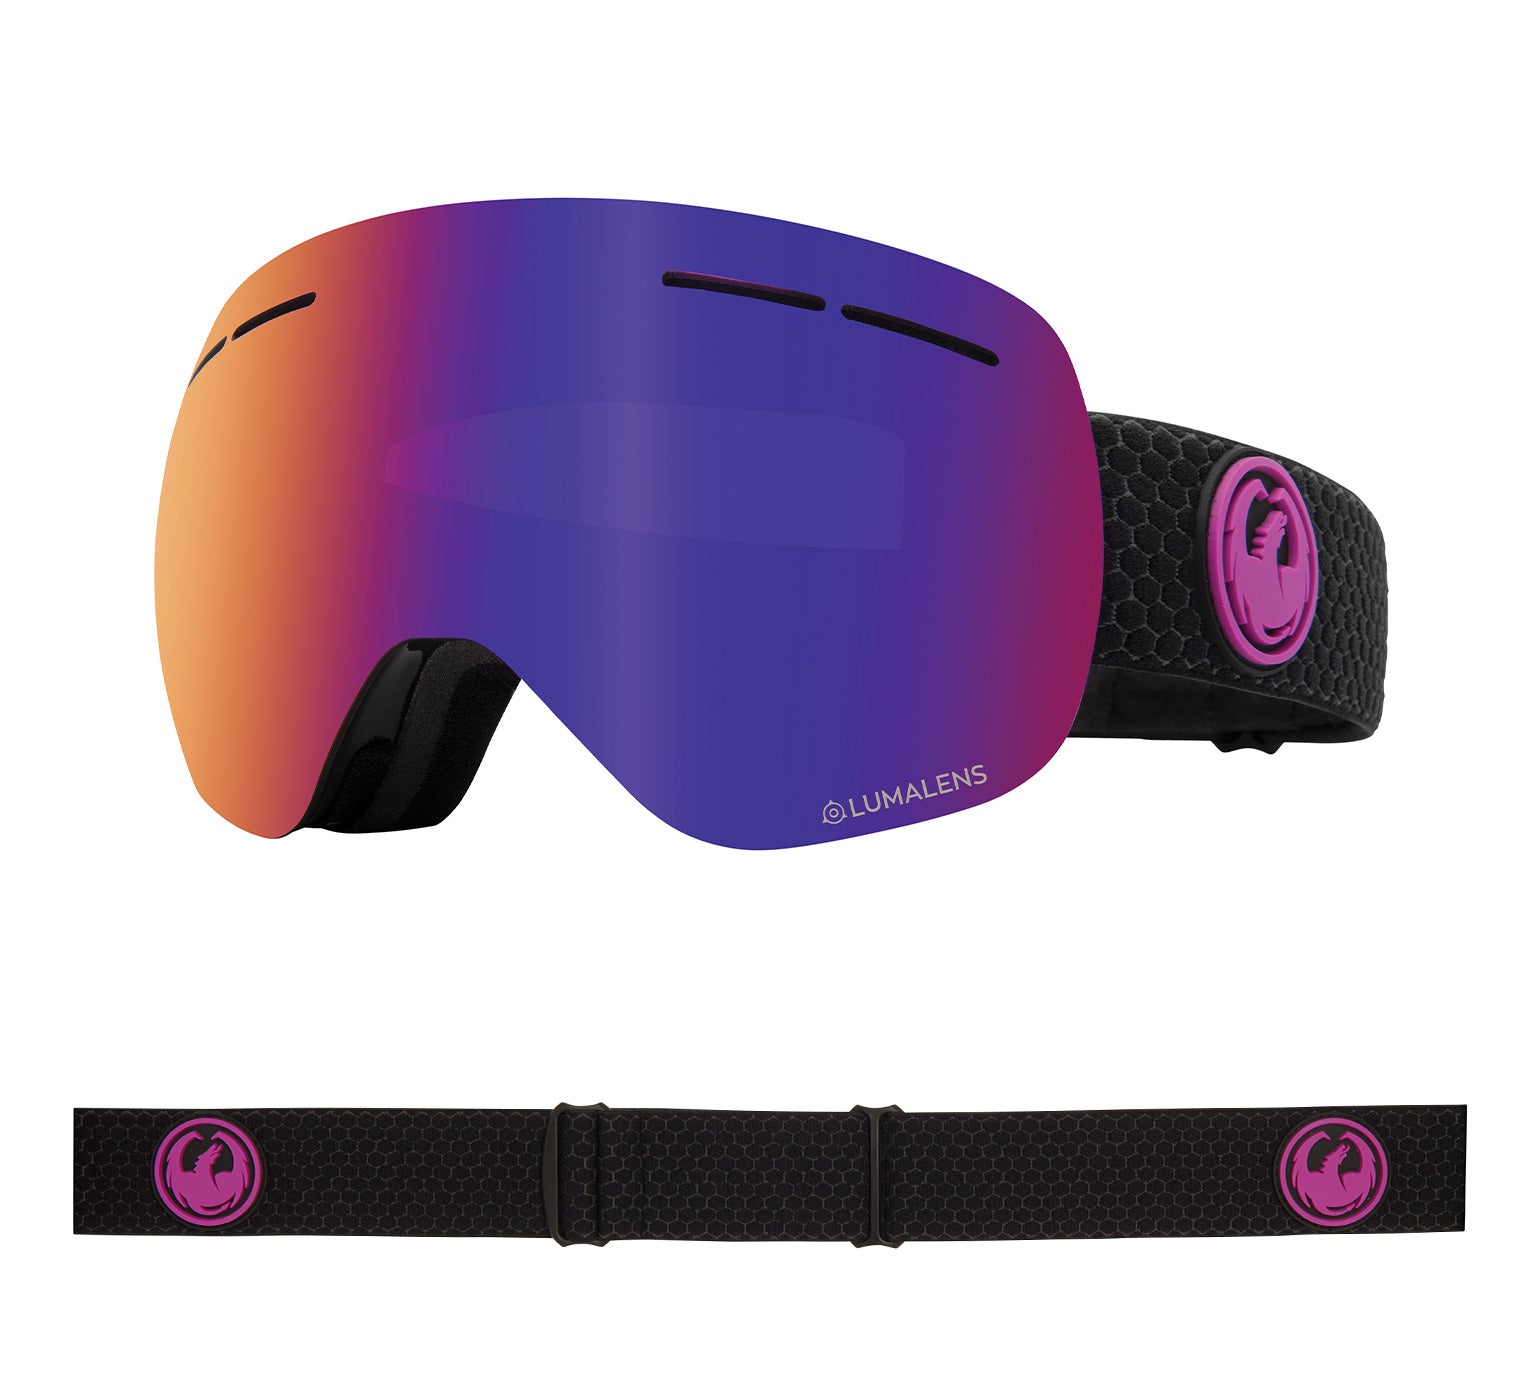 X1s - Split with Lumalens Purple Ionized & Lumalens Amber Lens